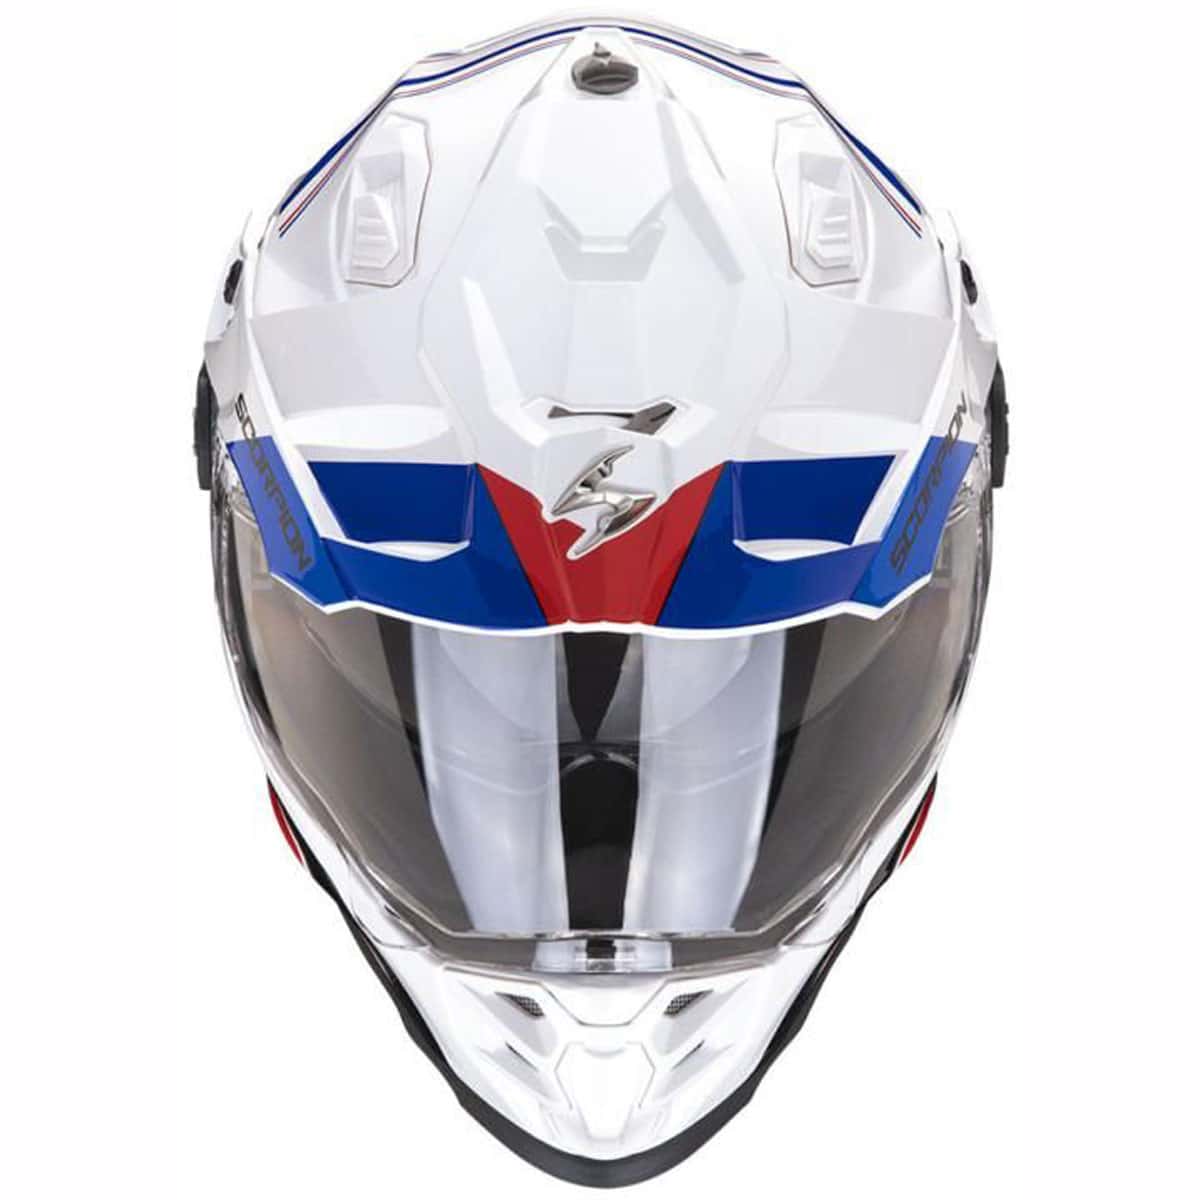 Scorpion ADF 9000 Adventure Helmet Desert - White Blue Red top